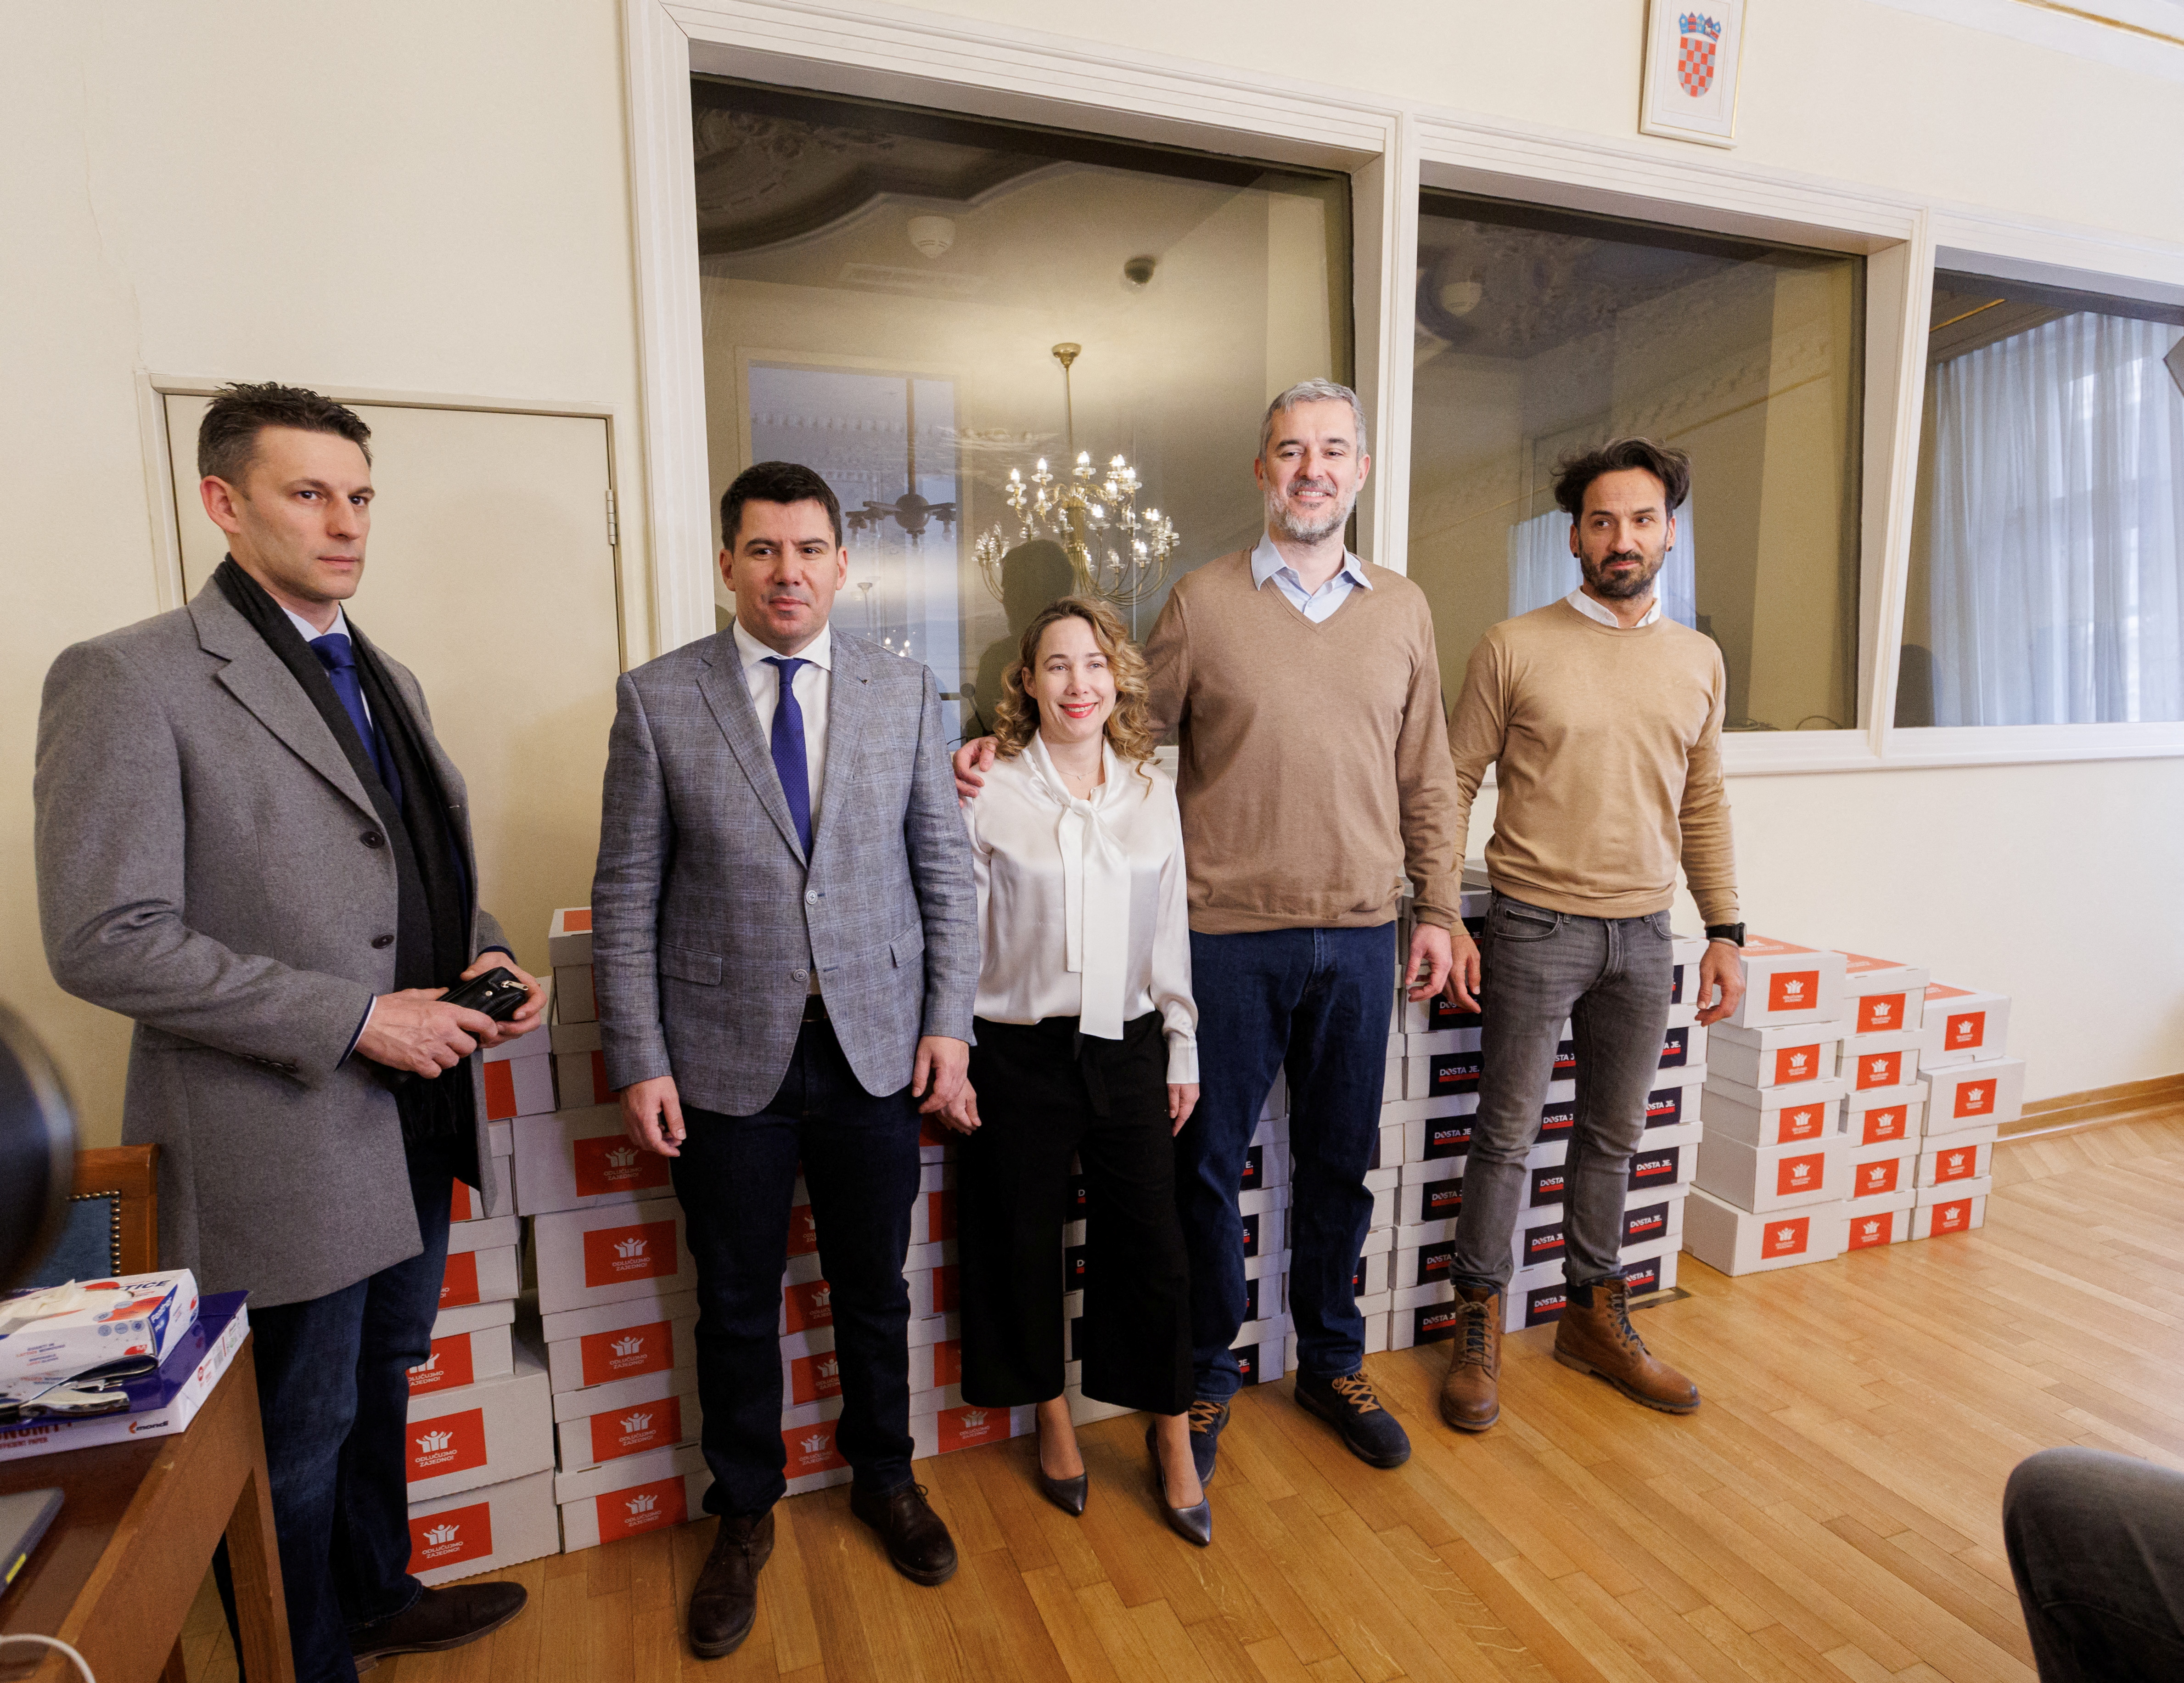 Croatian politicians Bozo Petrov, Nikola Grmoja, Marija Selak Raspudic, Nino Raspudic and Marin Miletic stand next to signatures for the referendum against coronavirus disease (COVID-19) pass in Zagreb